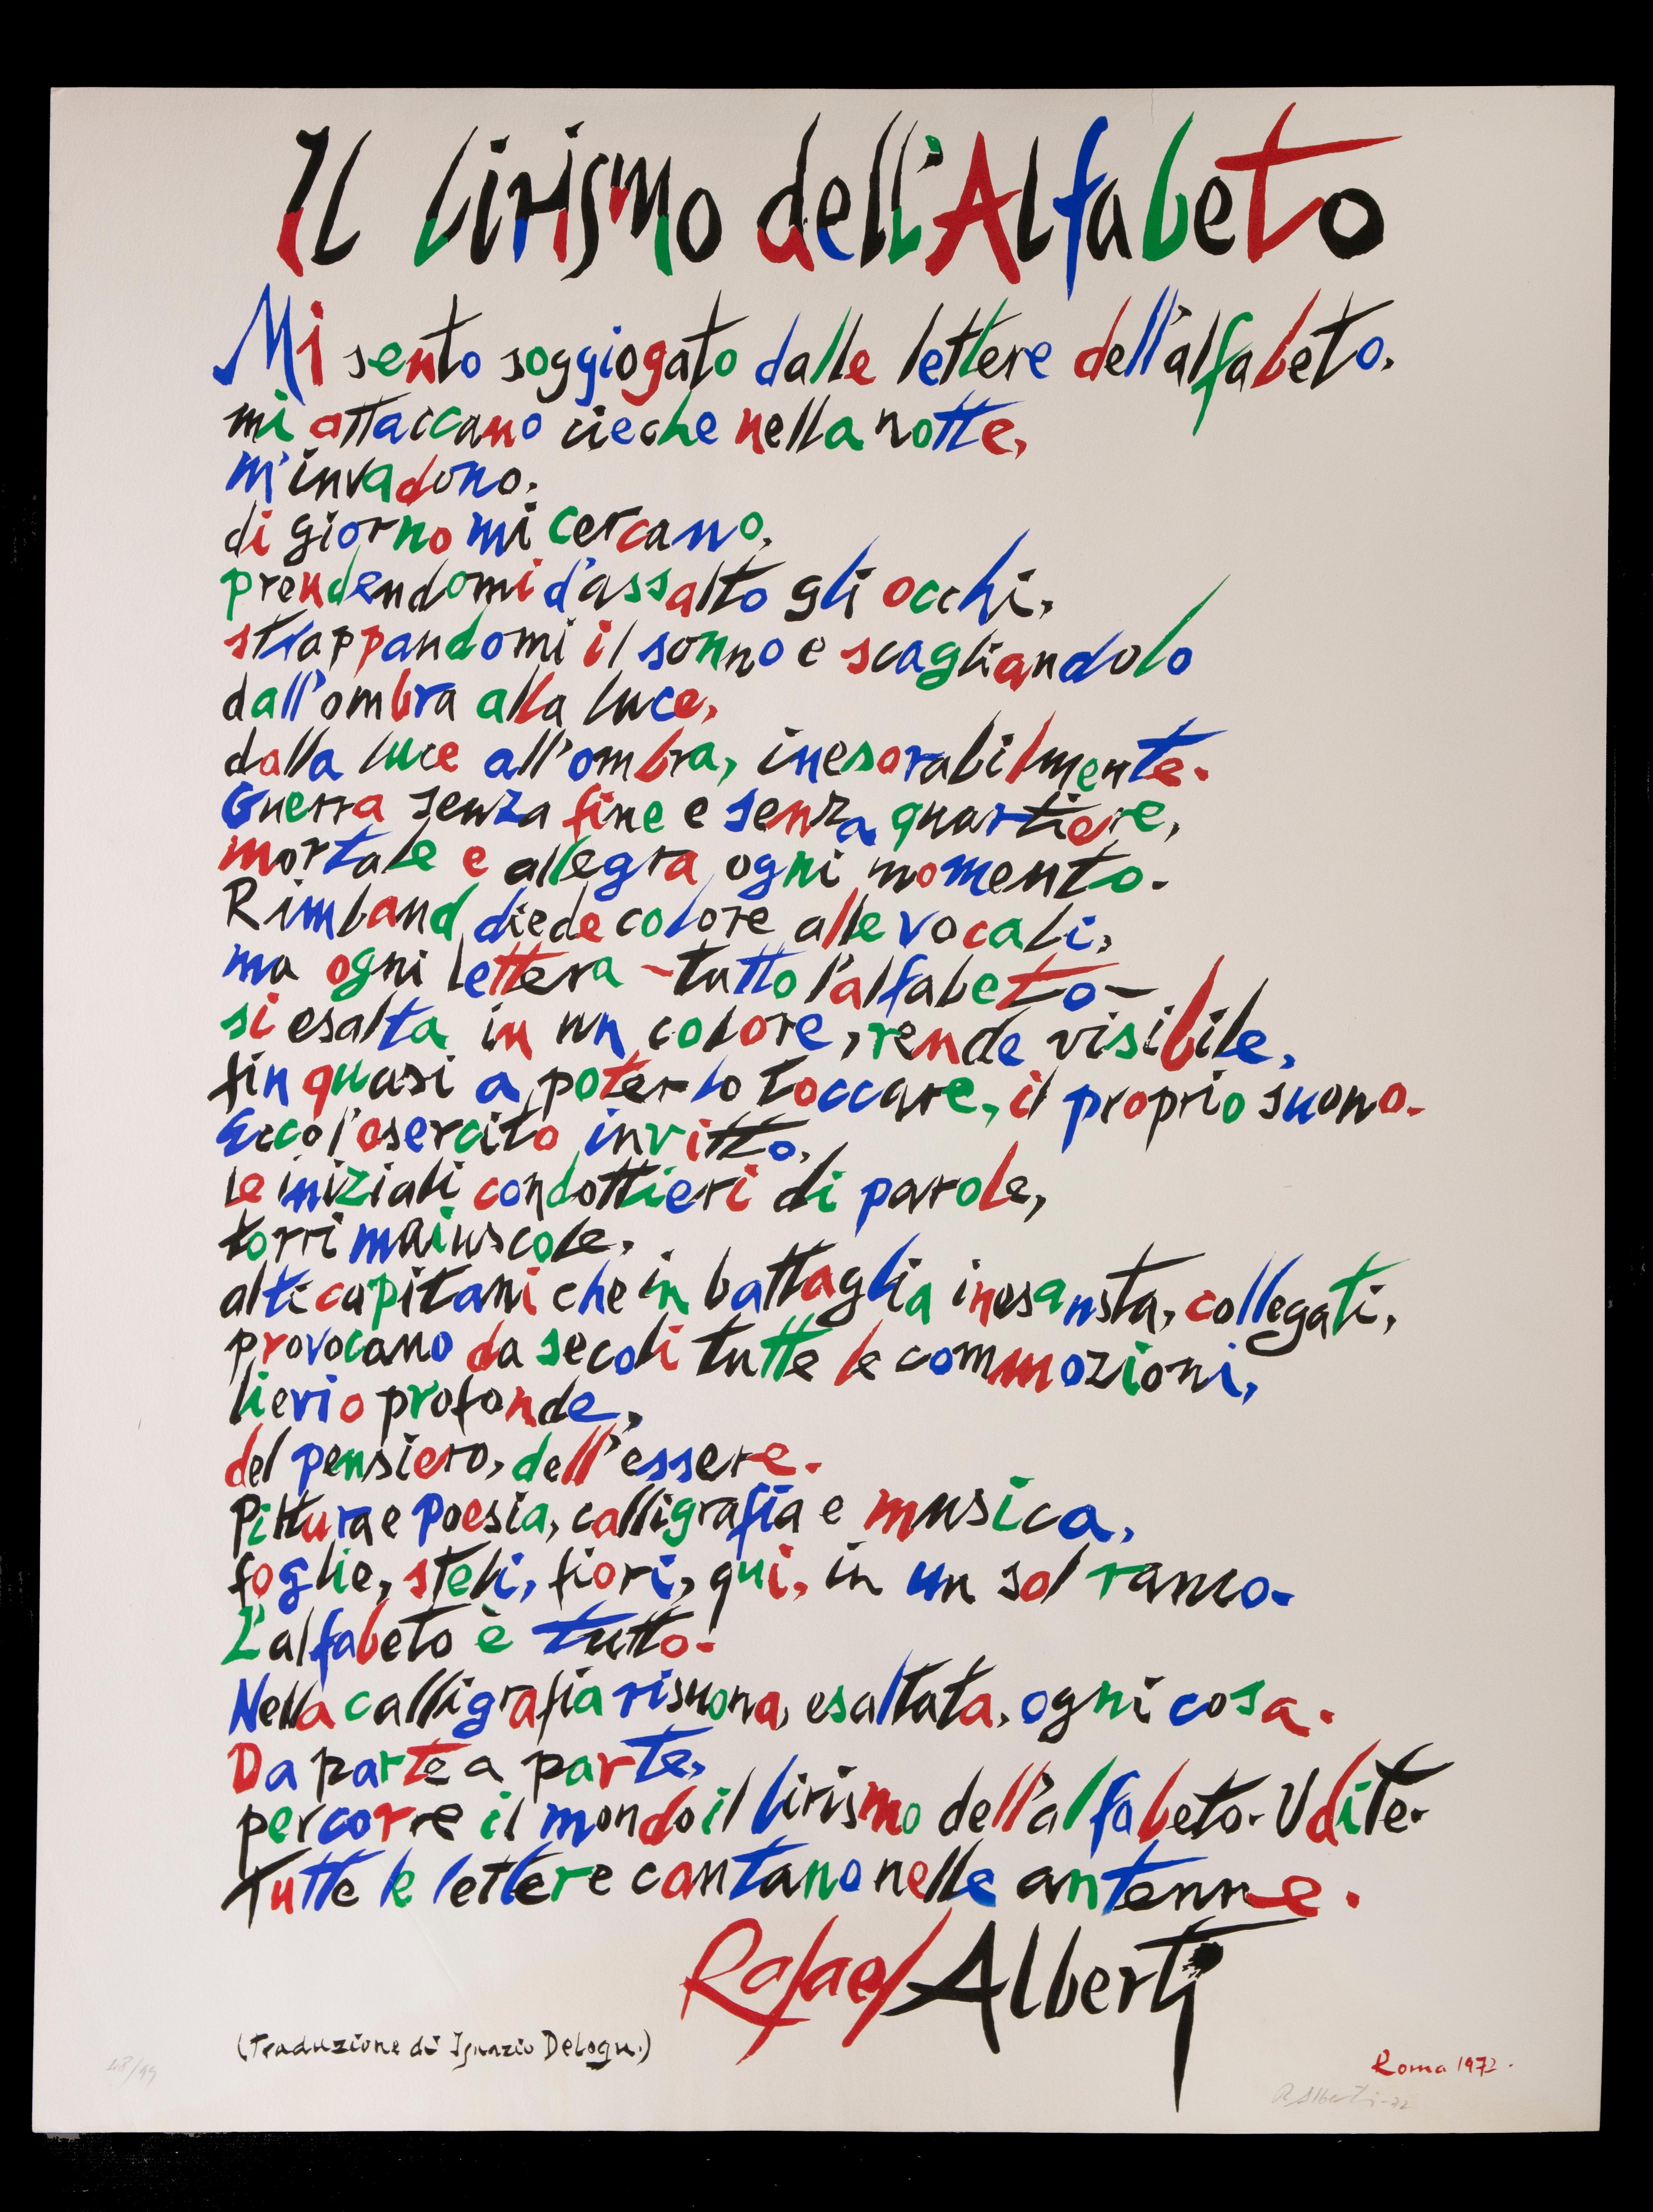 Rafael Alberti Figurative Print - The Lyricism of Alphabet - Original Lithograph by Raphael Alberti - 1972